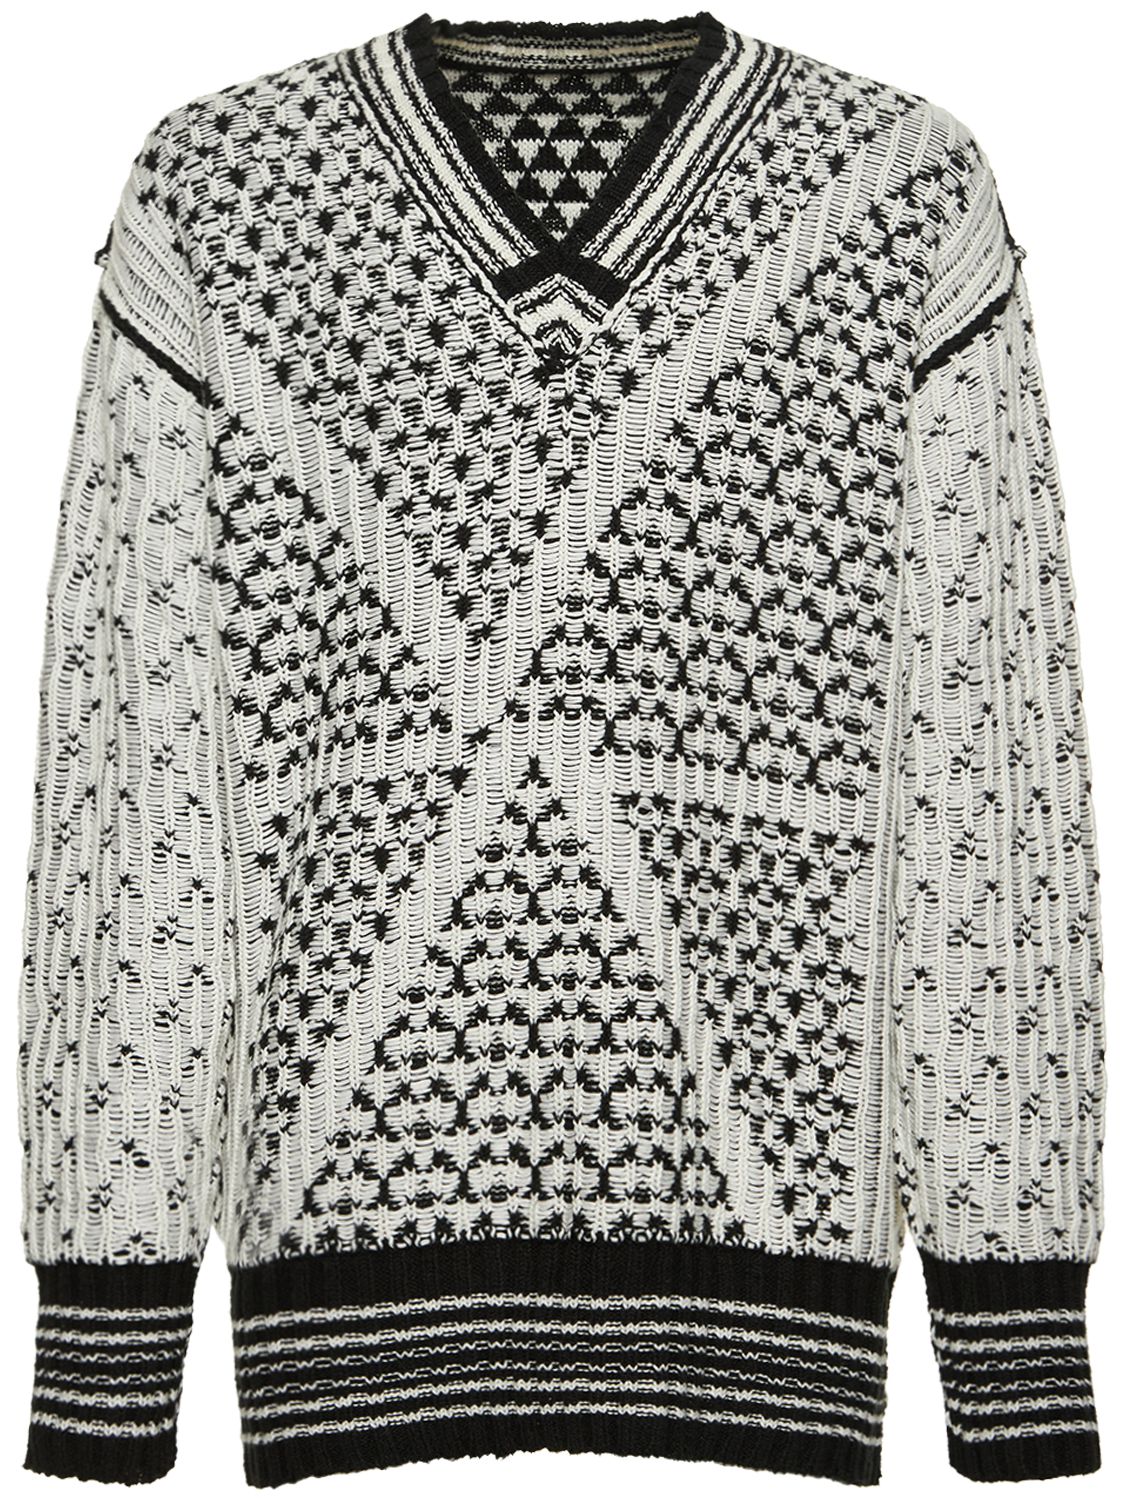 Reversible Cotton Jacquard Knit Sweater